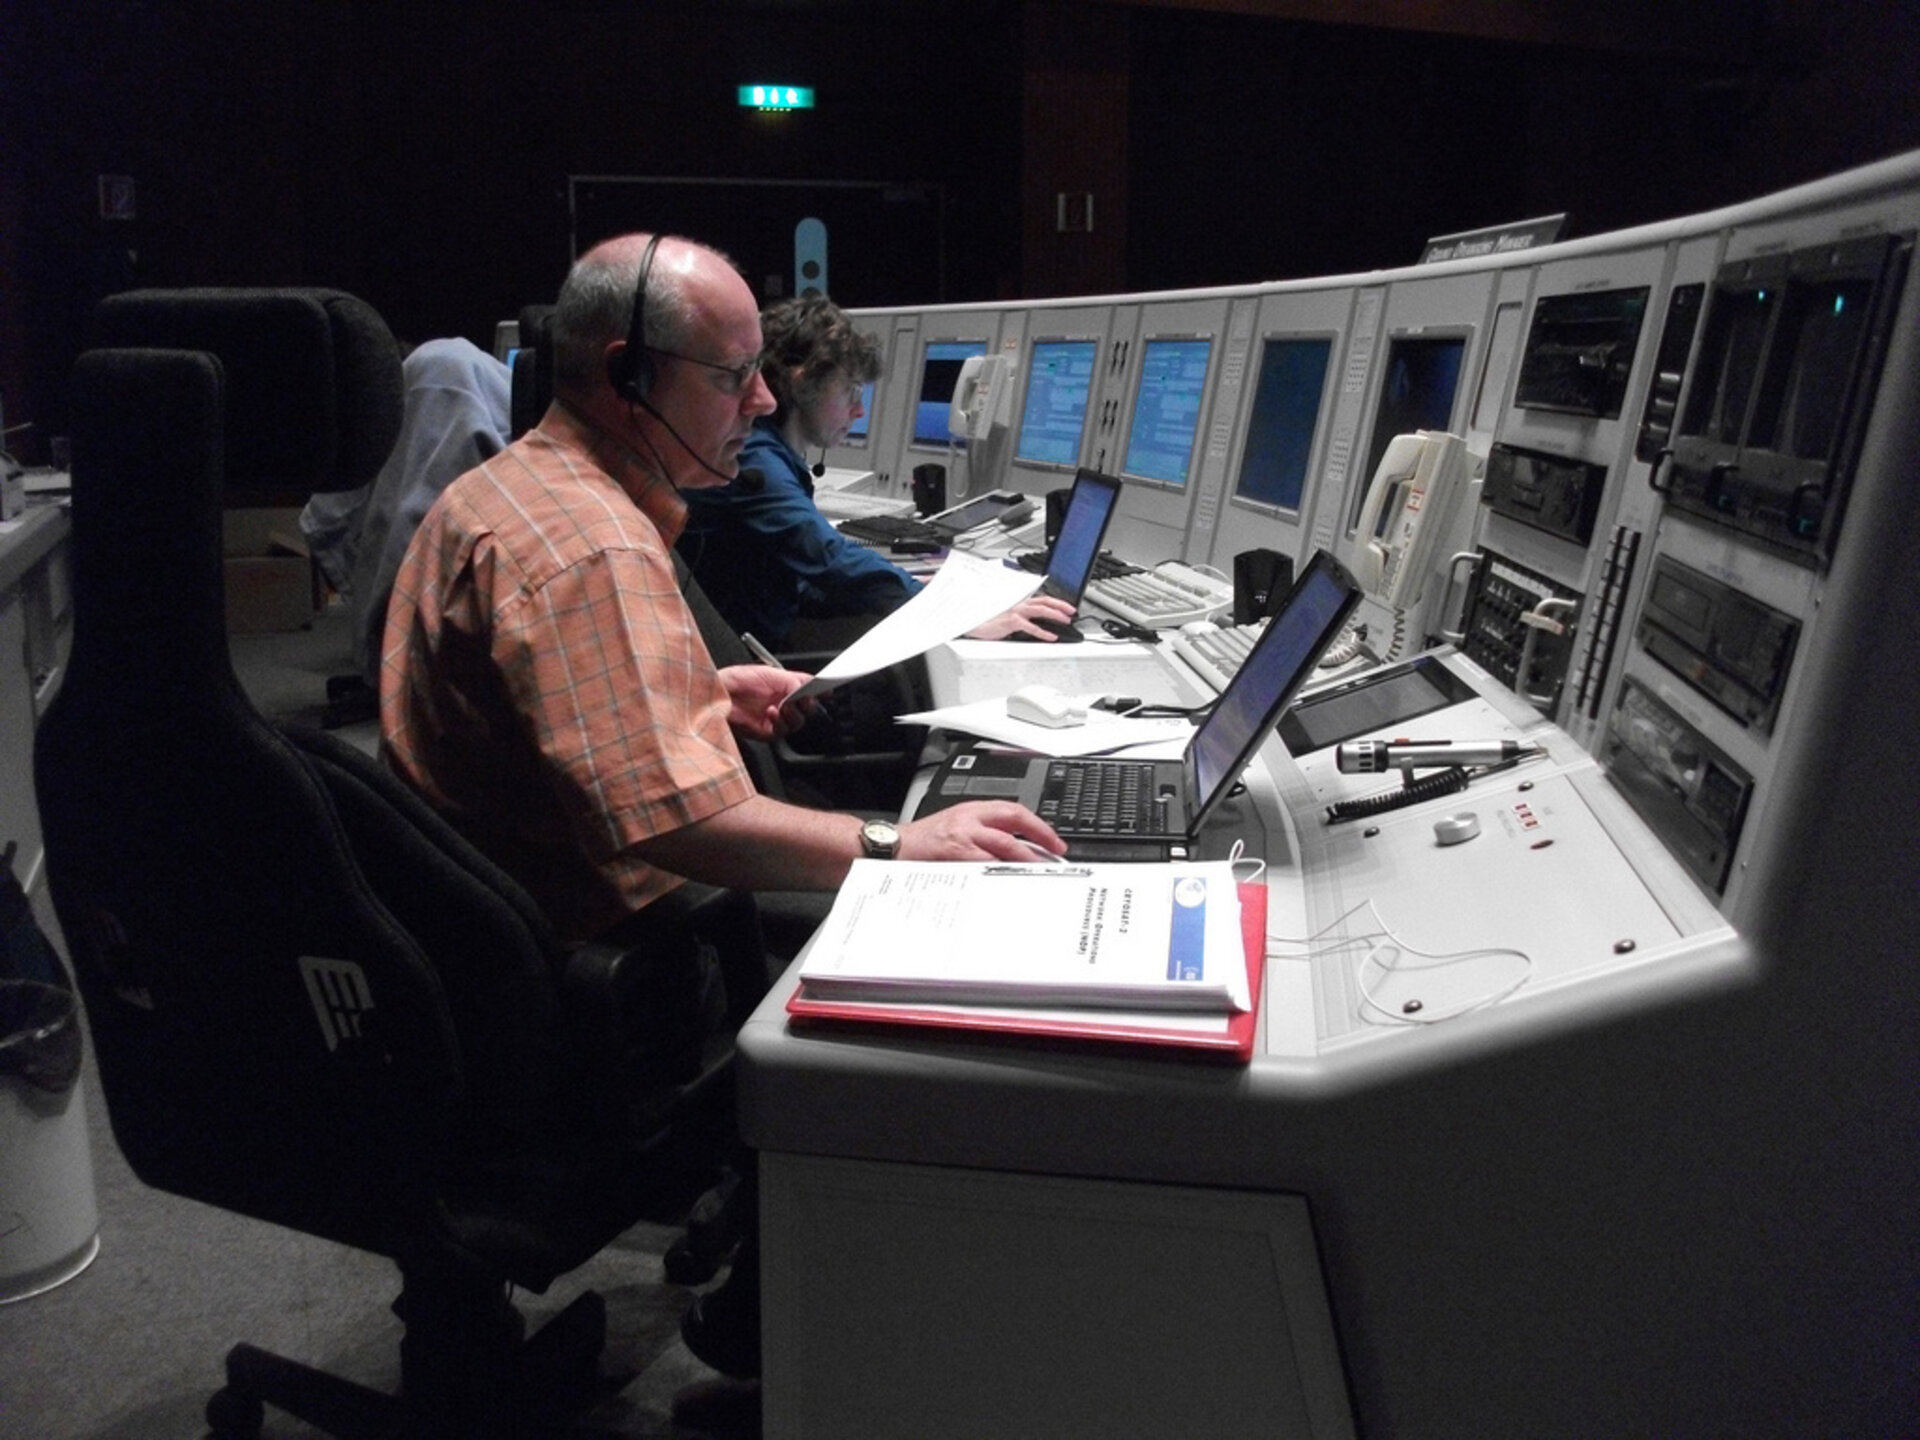 CryoSat-2 dress rehearsal at ESOC